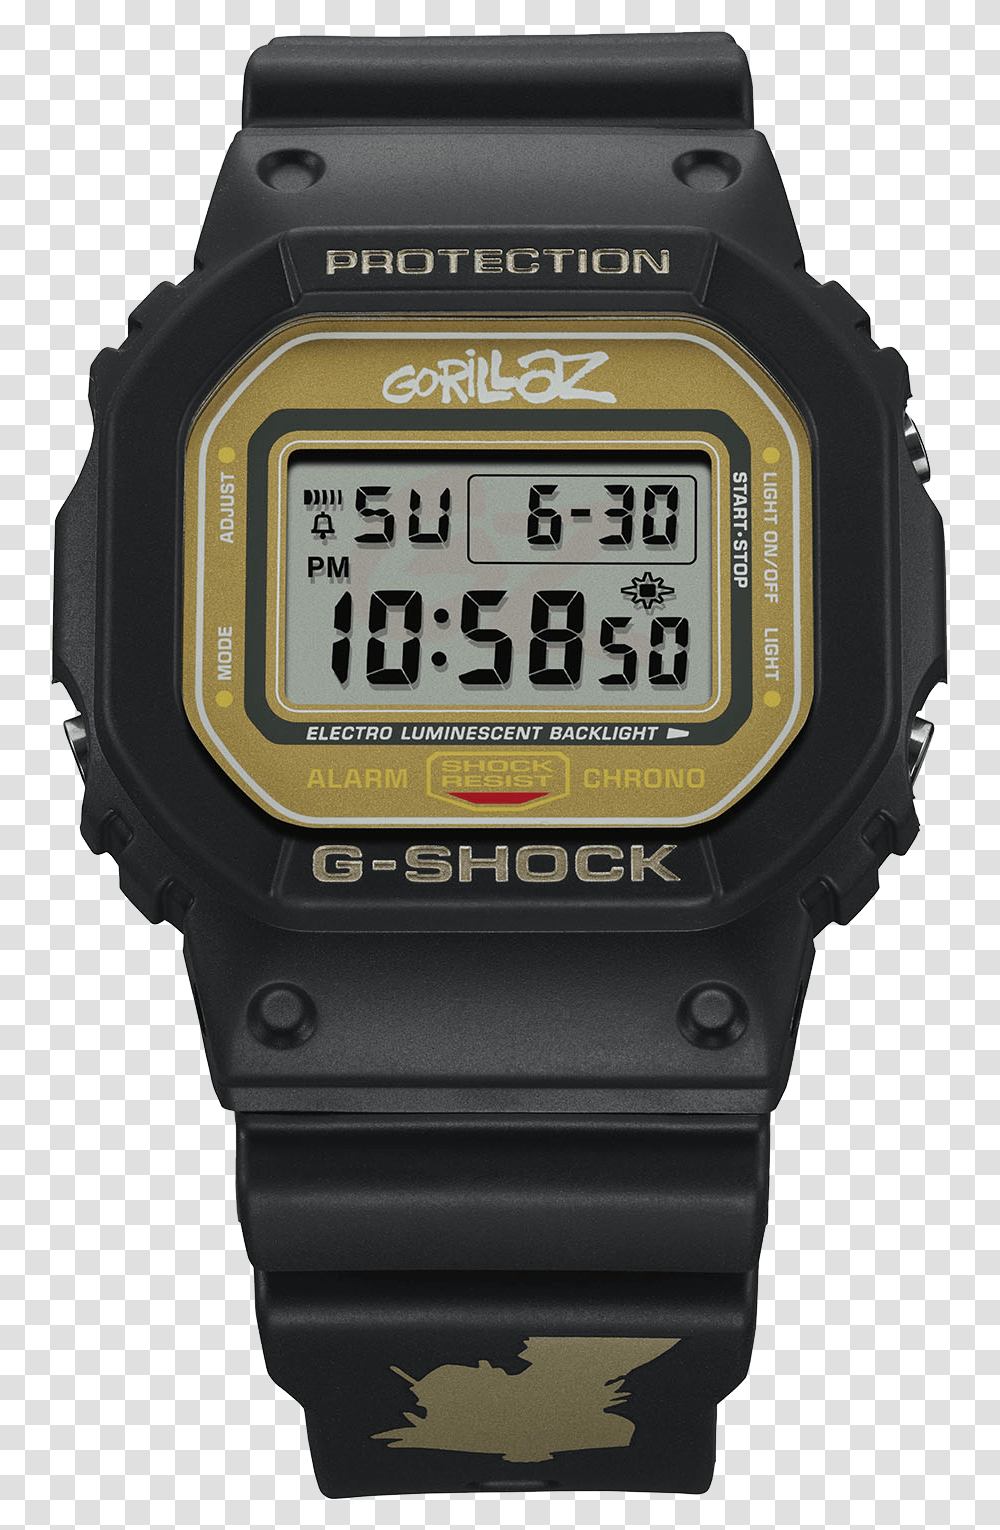 G Shock Dw5600grlz2 1er G Shock Gorillaz, Wristwatch, Digital Watch Transparent Png